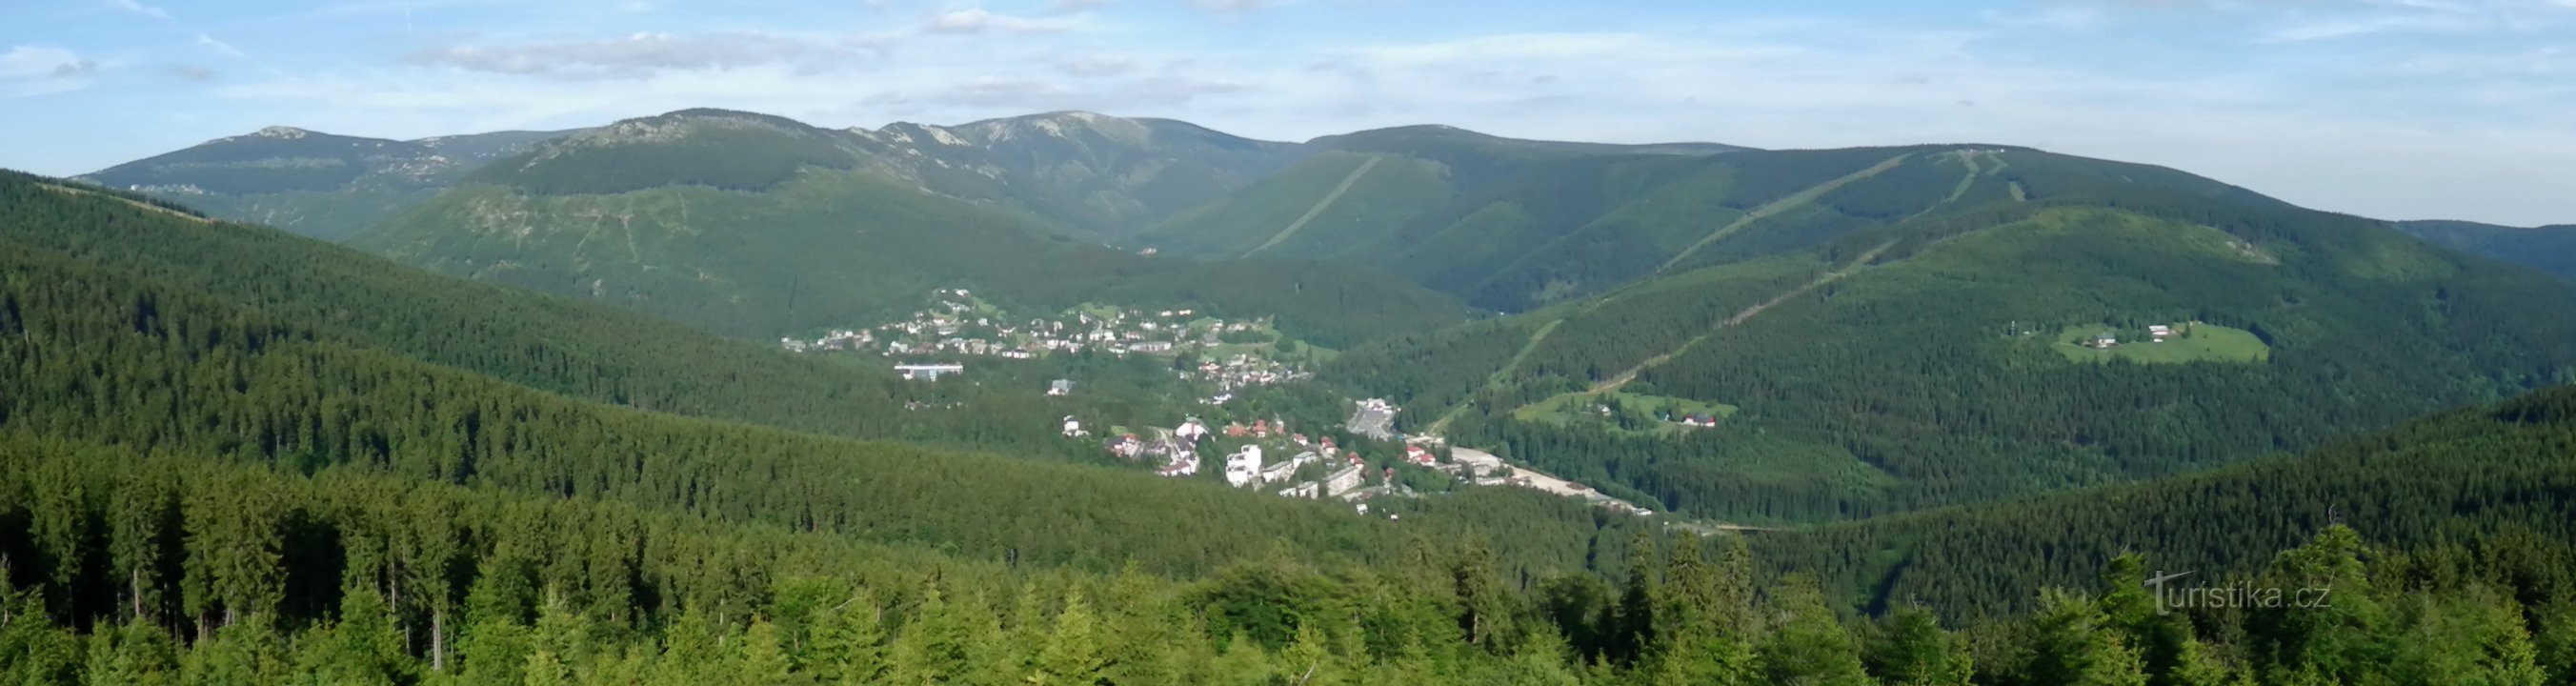 Панорамный вид со скалы Гарраха (от Малого Шпичака до Громовки), внизу